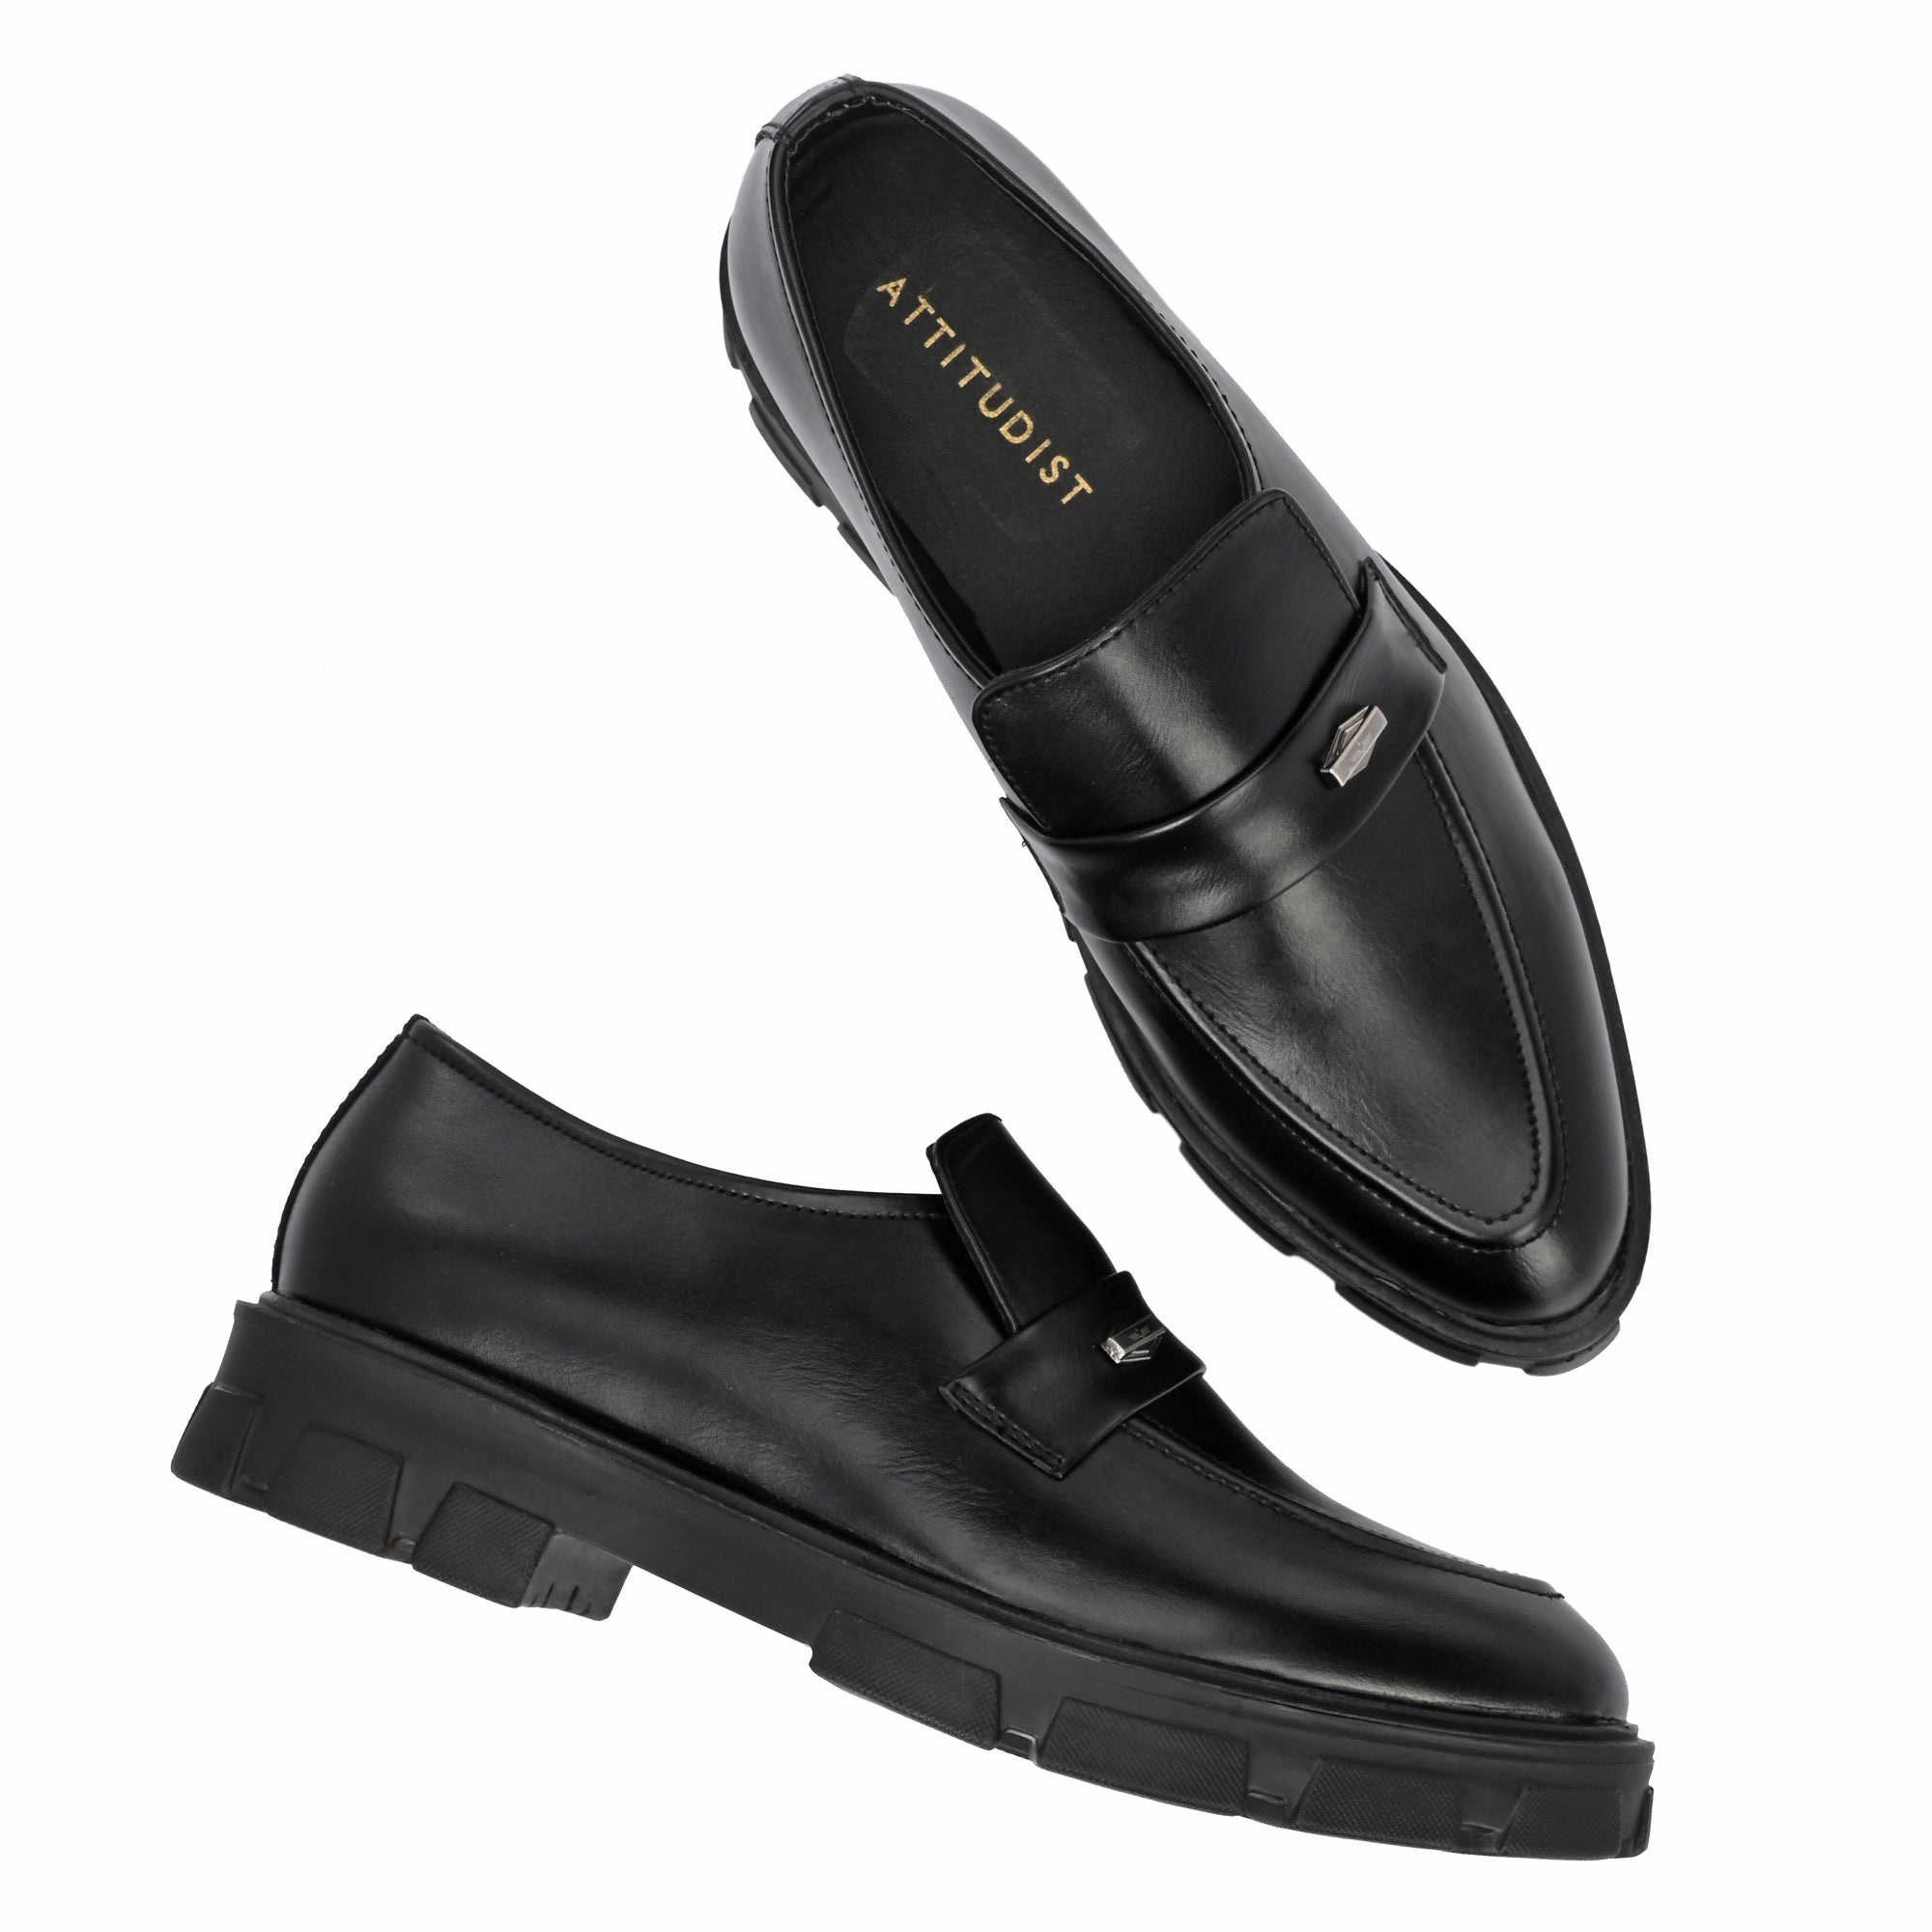 attitudist-black-high-heel-slip-on-penny-loafer-shoes-for-men